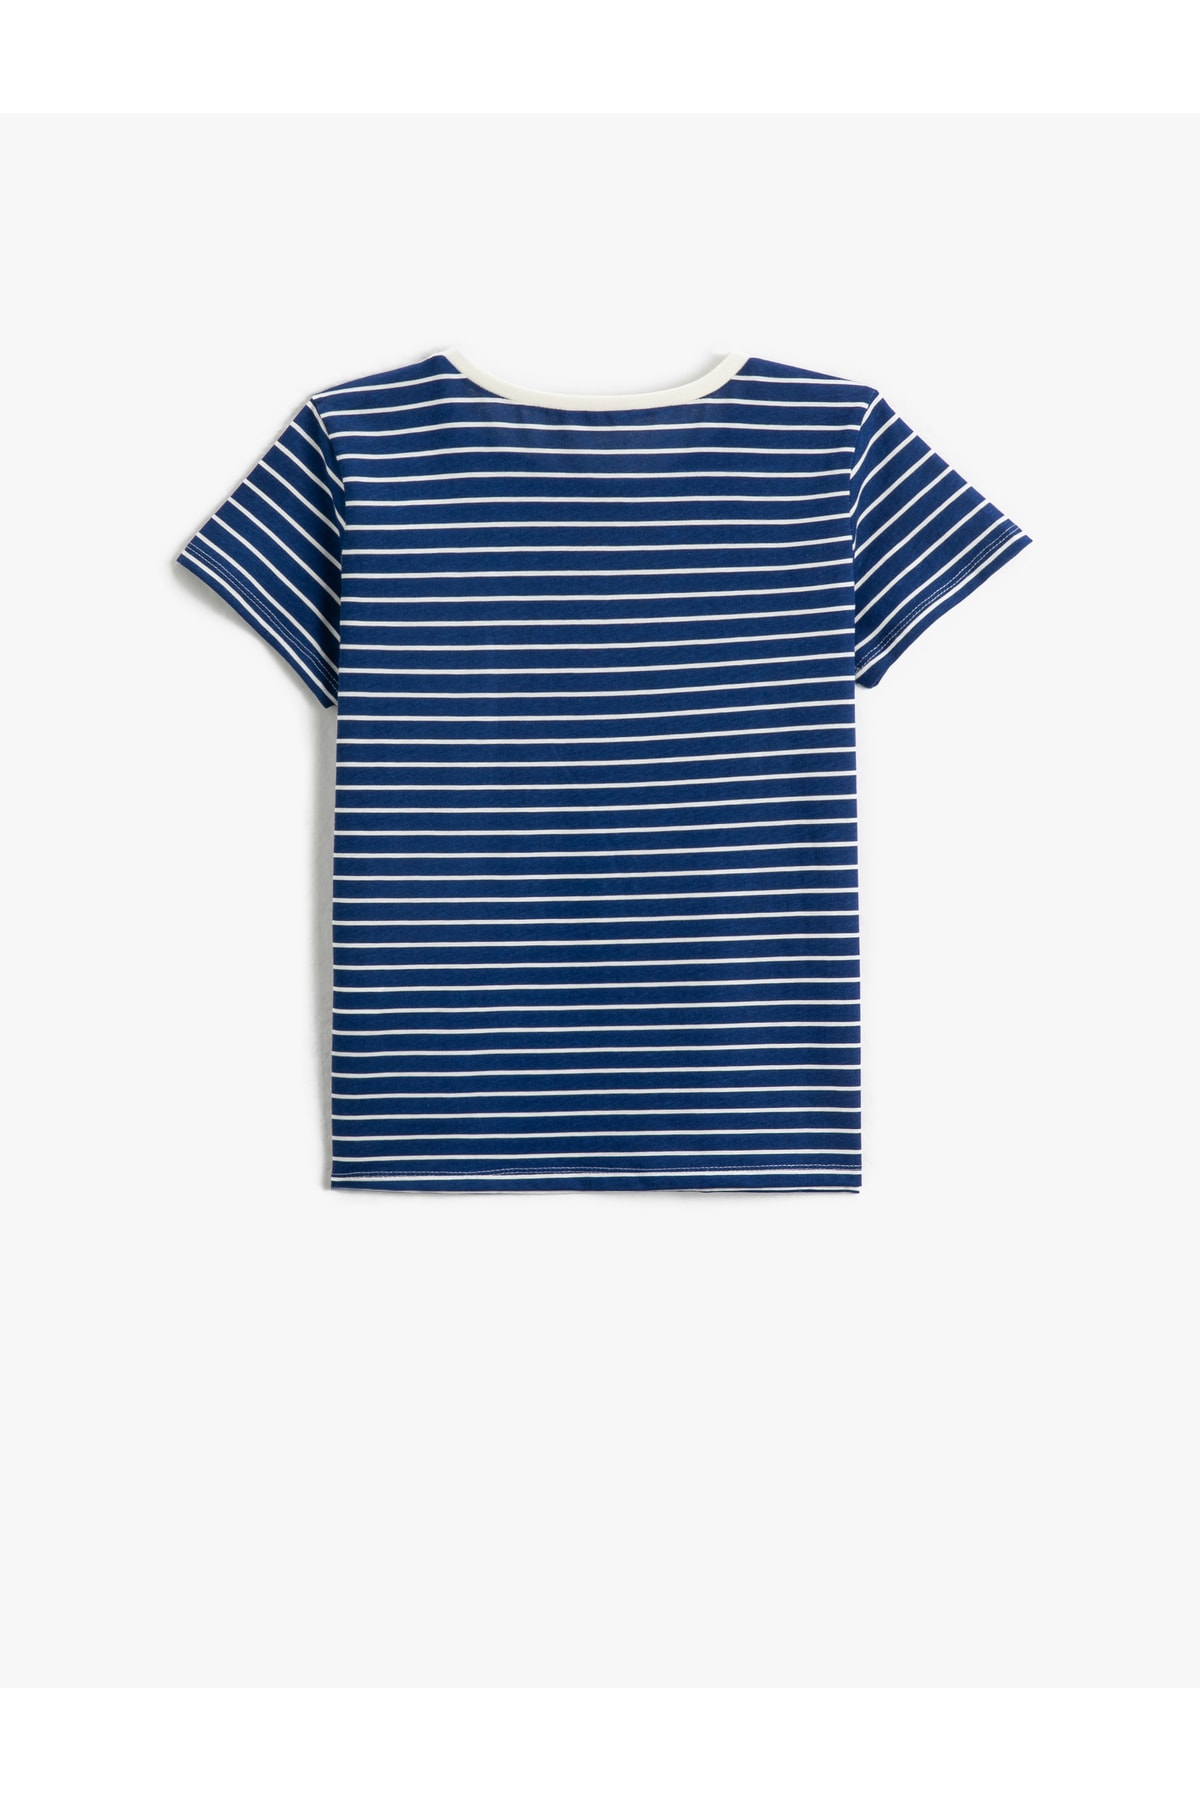 Koton Printed Striped T-Shirt Short Sleeves Crew Neck Cotton